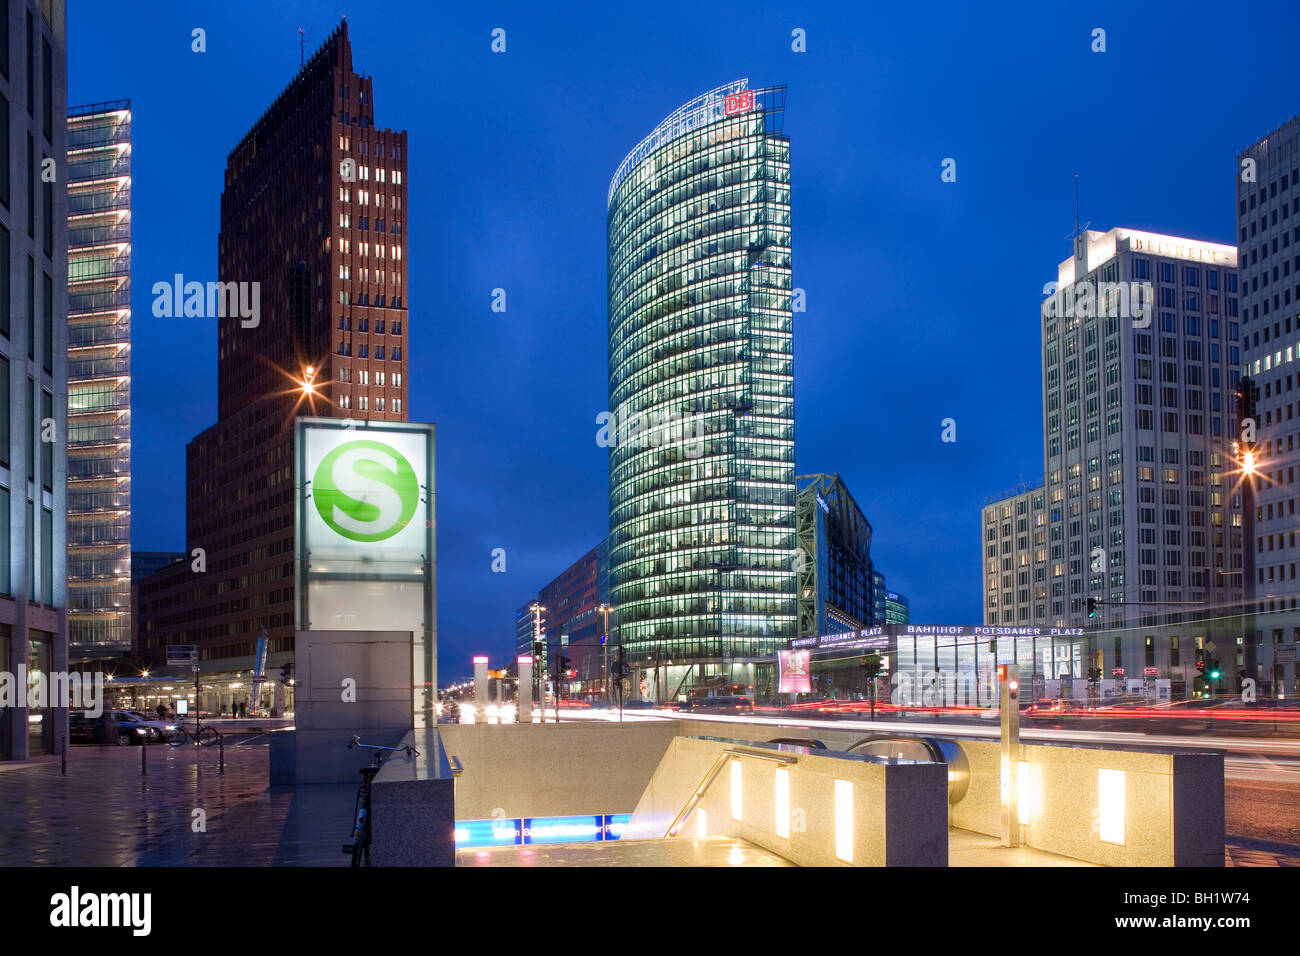 Potsdamer Platz from left to right, Hans Kollhoff Tower, Bahn Tower, Sony Center and Beisheim Center, Potsdamer Platz, Berlin, G Stock Photo